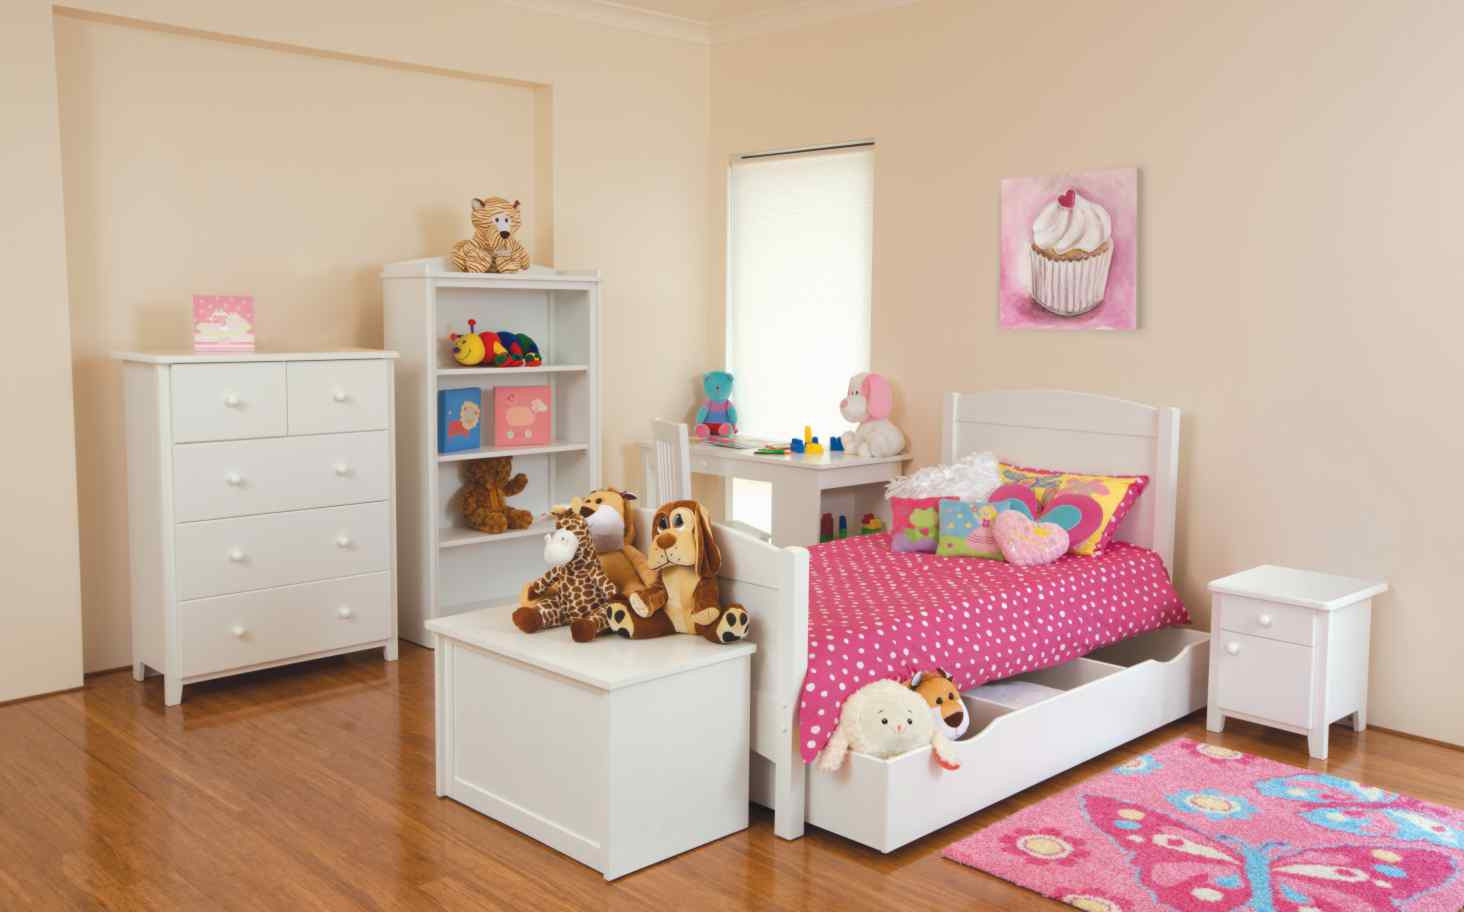 Bedroom Set For Kids
 Kids Bedroom Furniture Perth Decor IdeasDecor Ideas